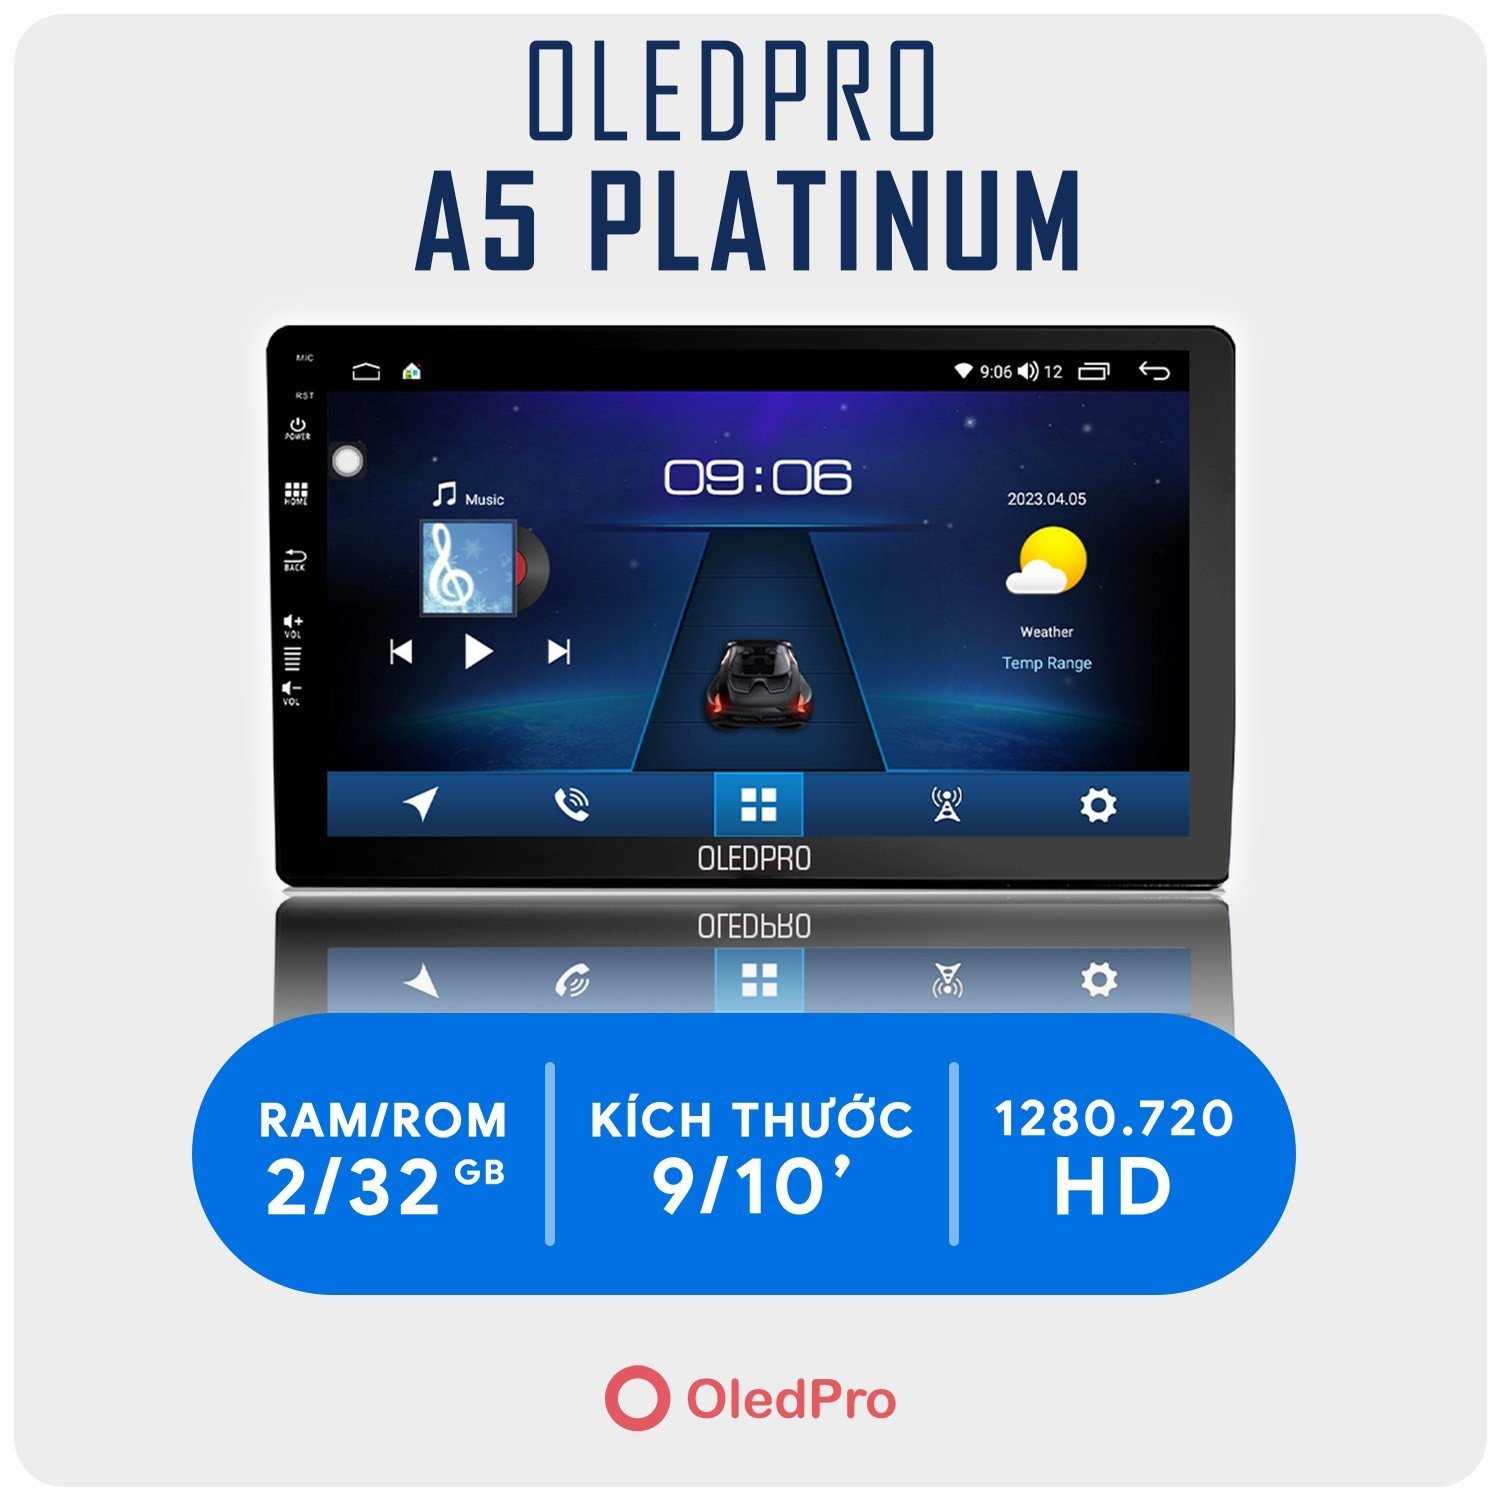 Oledpro A5 Platinum